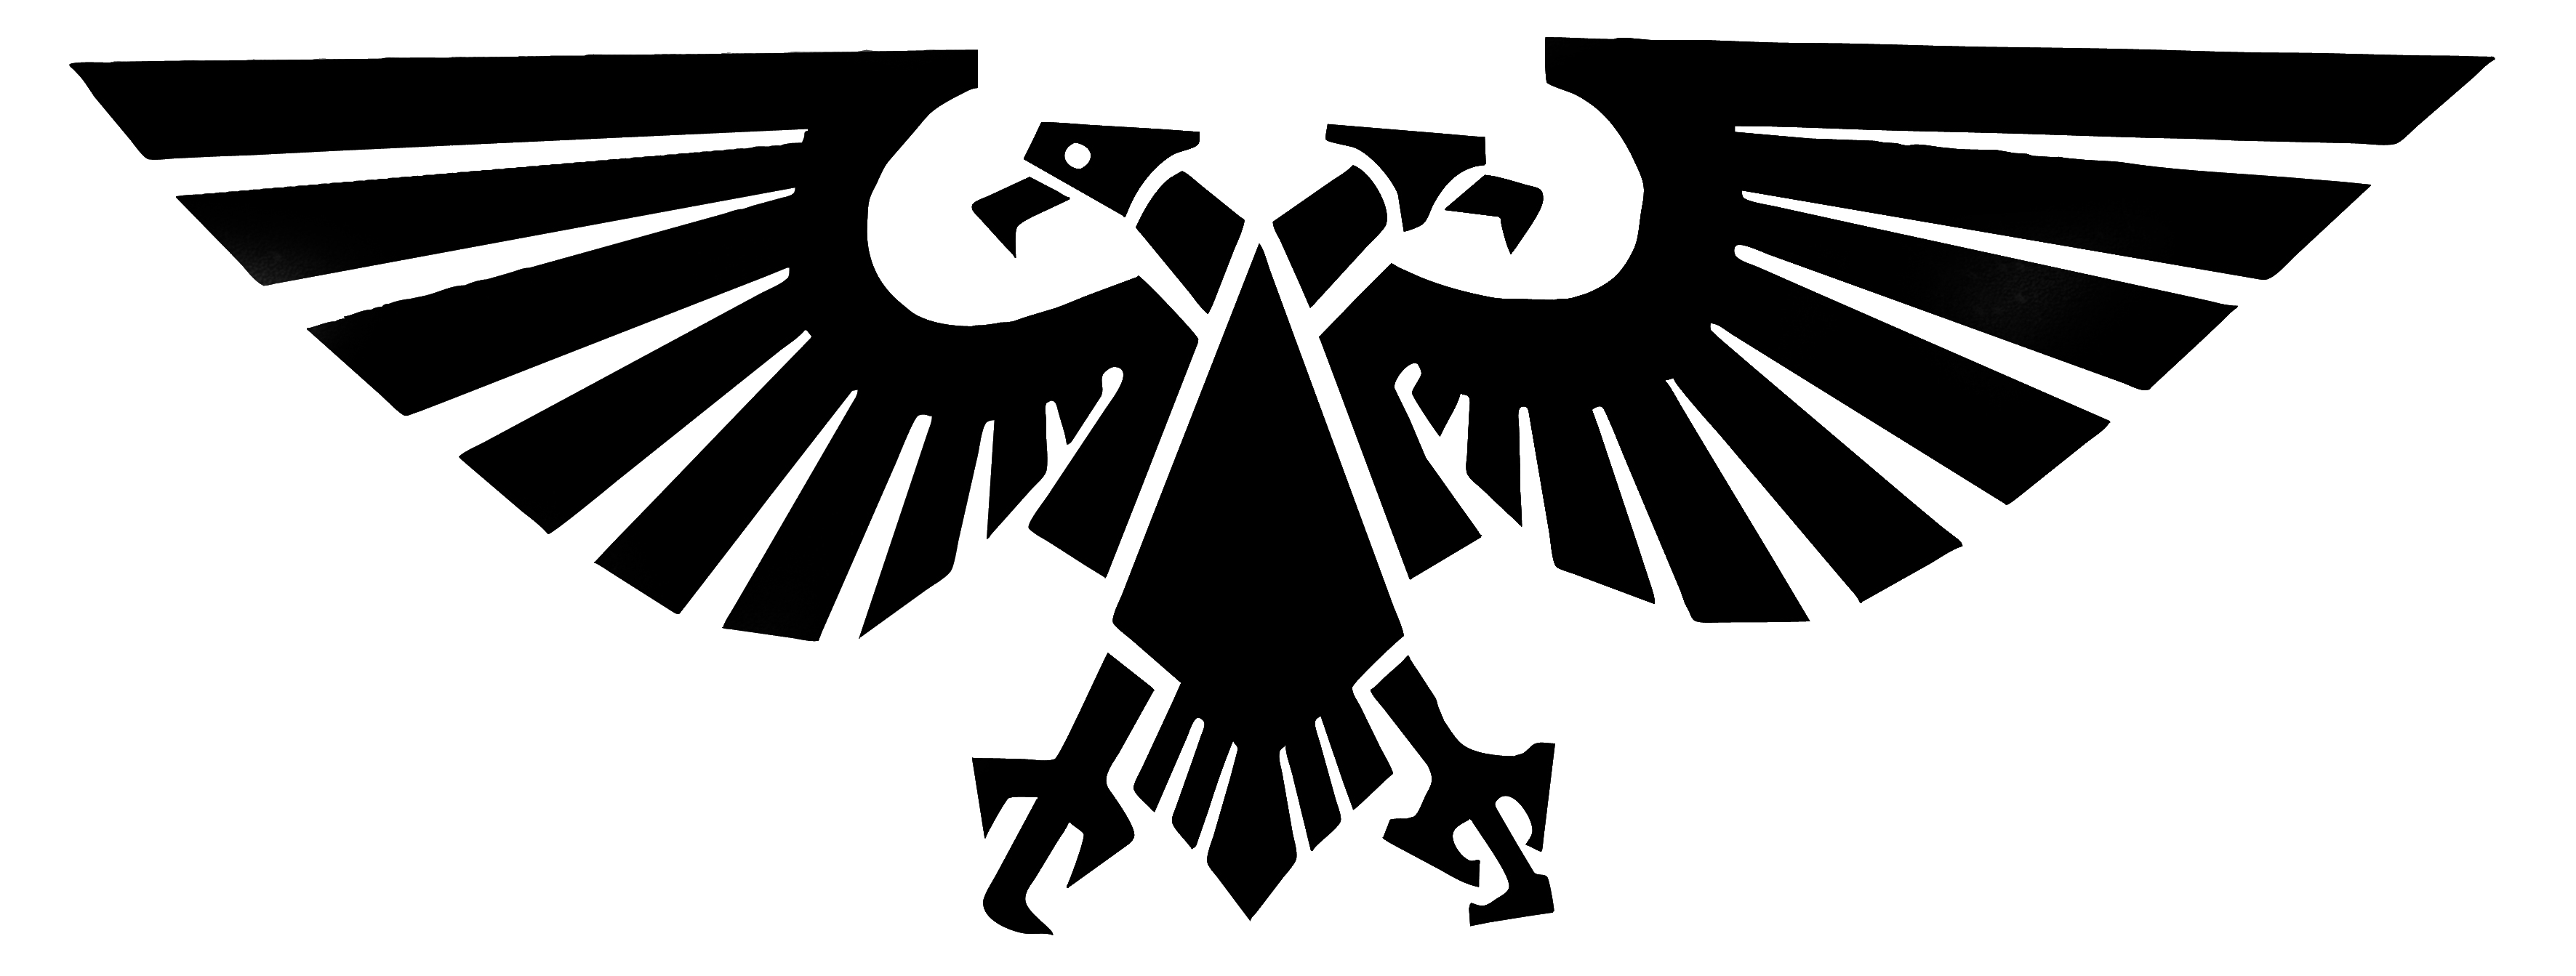 Aquila bicipite logo nero